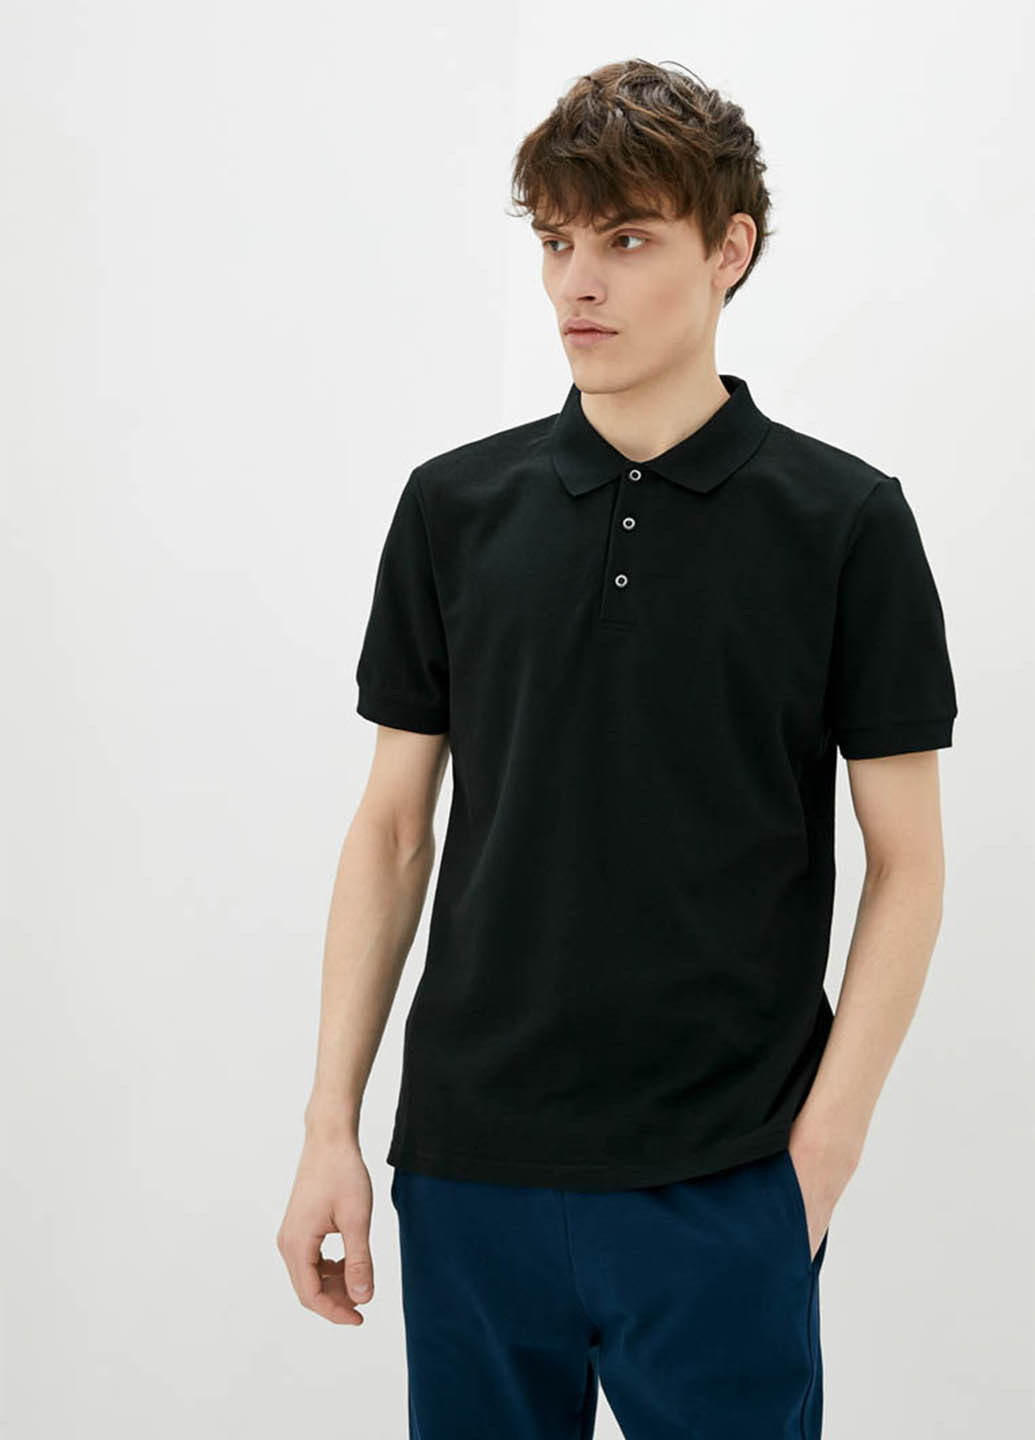 Черная футболка-поло для мужчин Promin однотонная